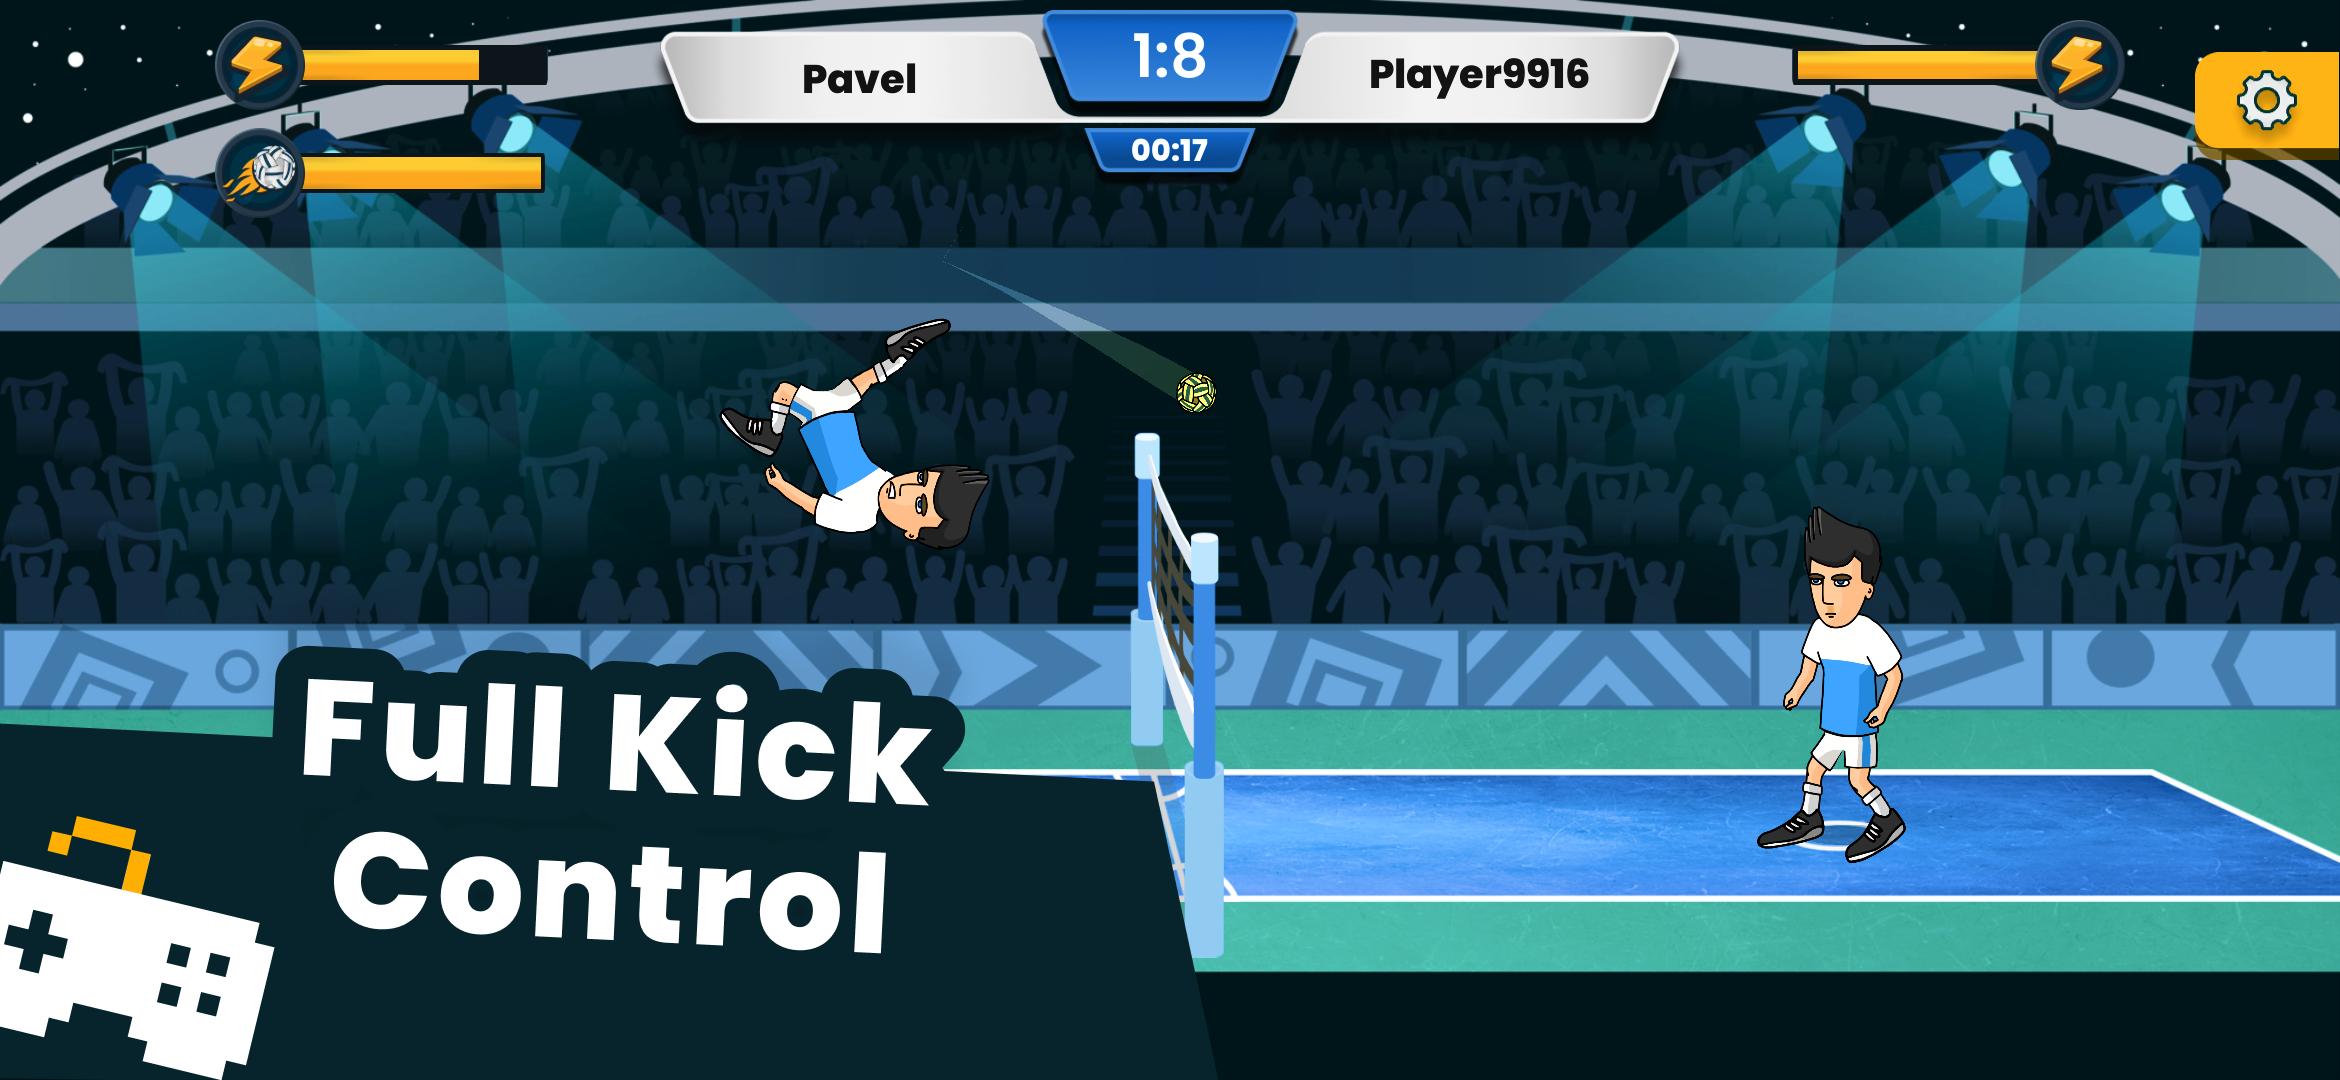 Sepak soccer: street challenge sports game 0.41.3 Screenshot 18